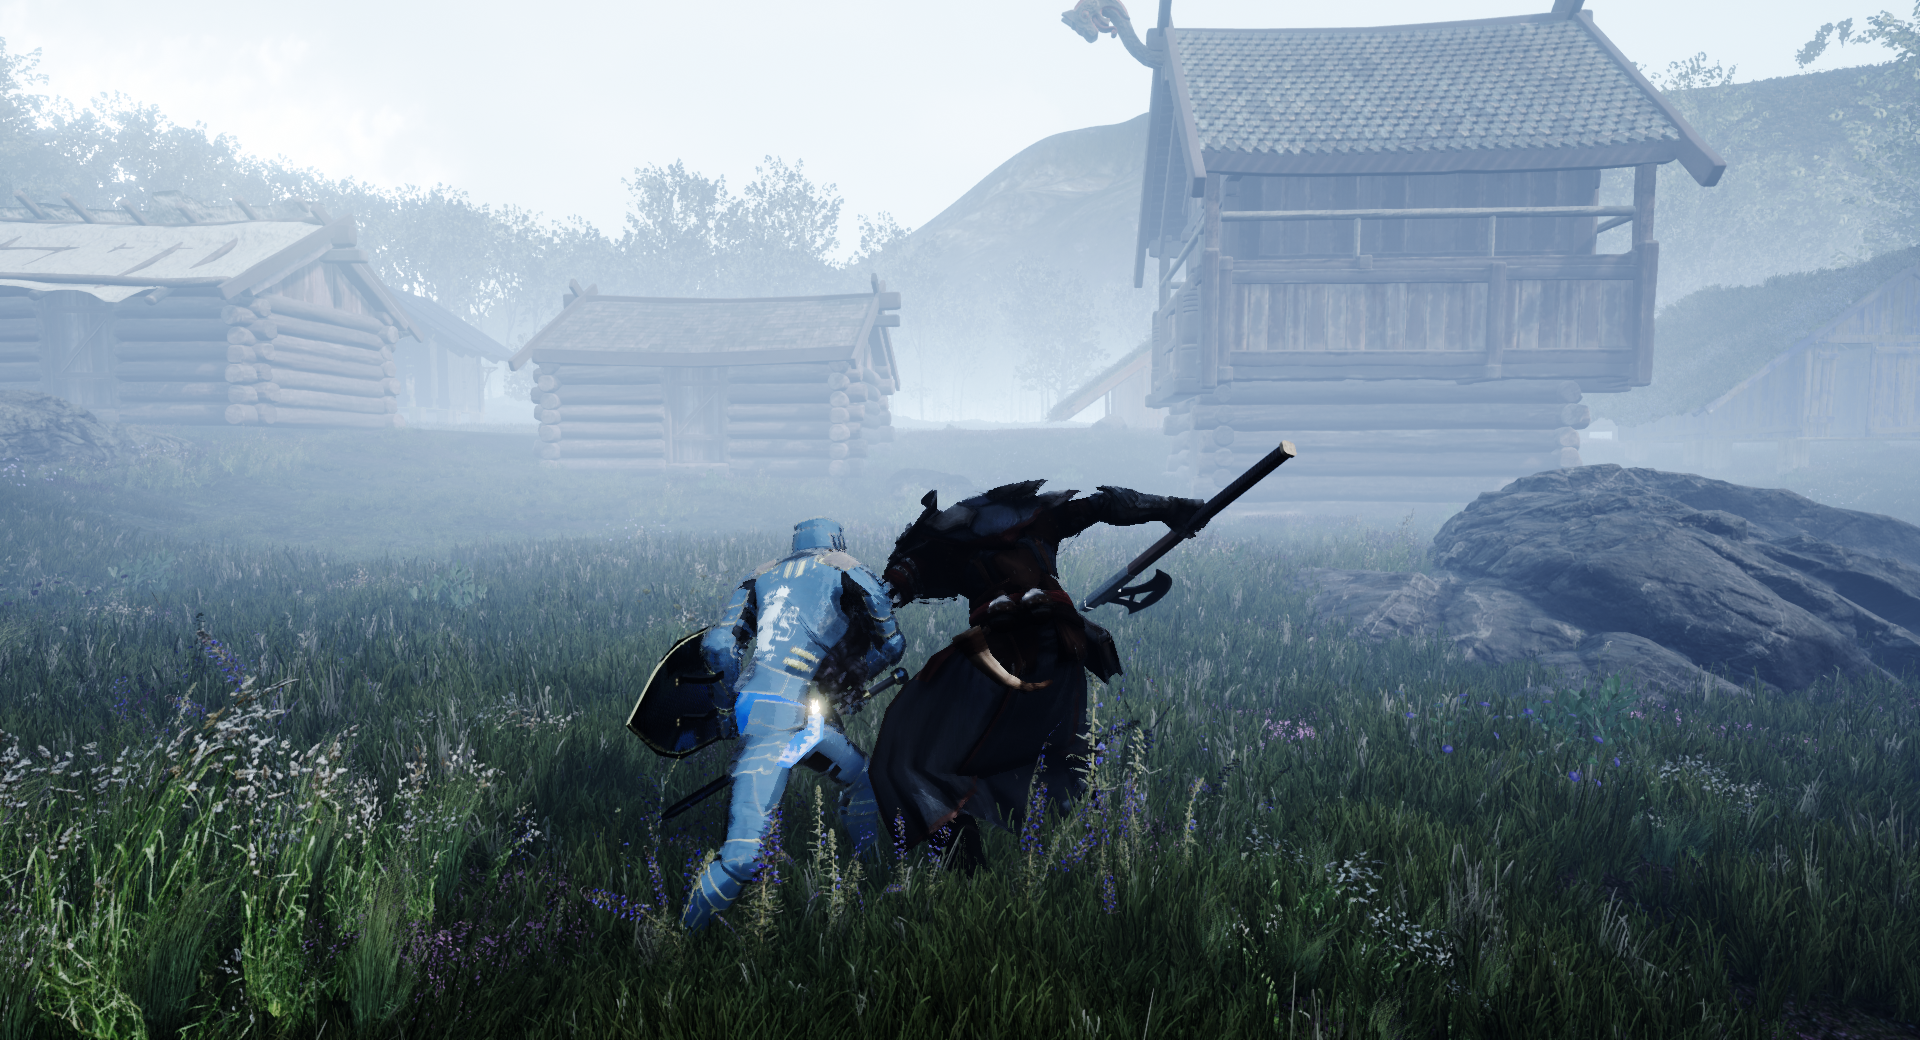 Paladin avatar fighting the Smidur avatar in UrGothic Battle Royale